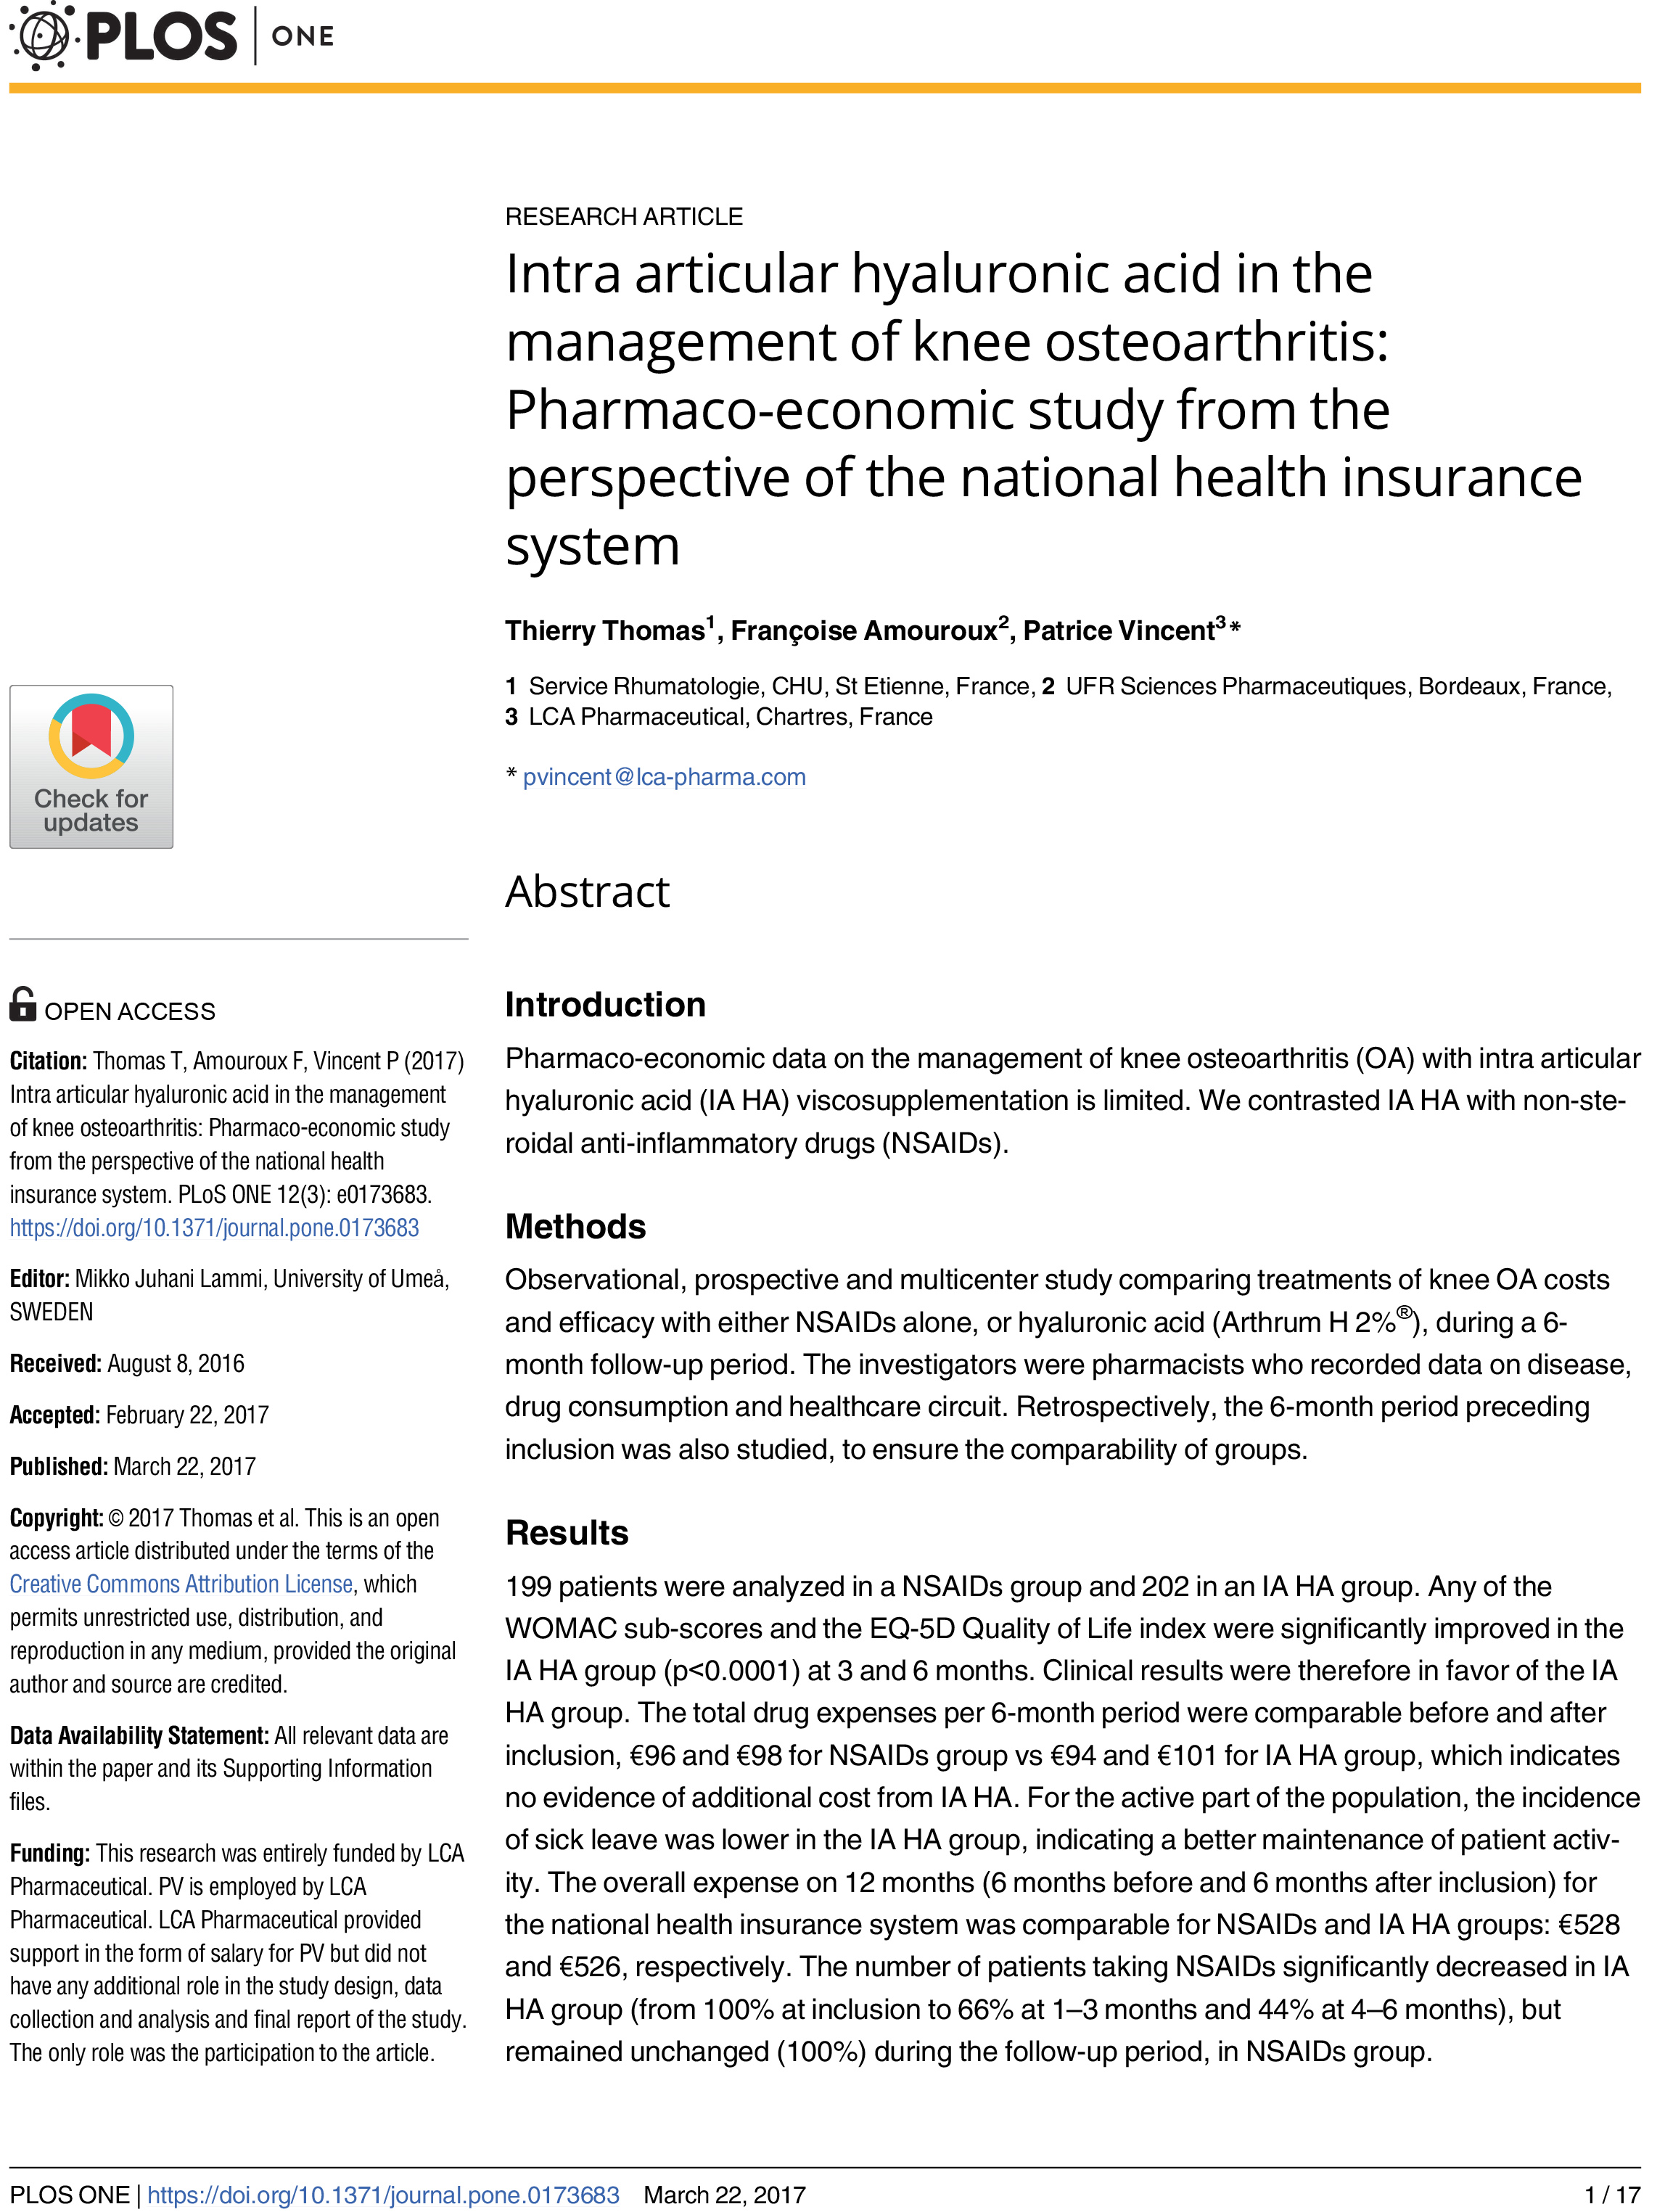 the_management_of_knee_osteoarthritis-1.jpg